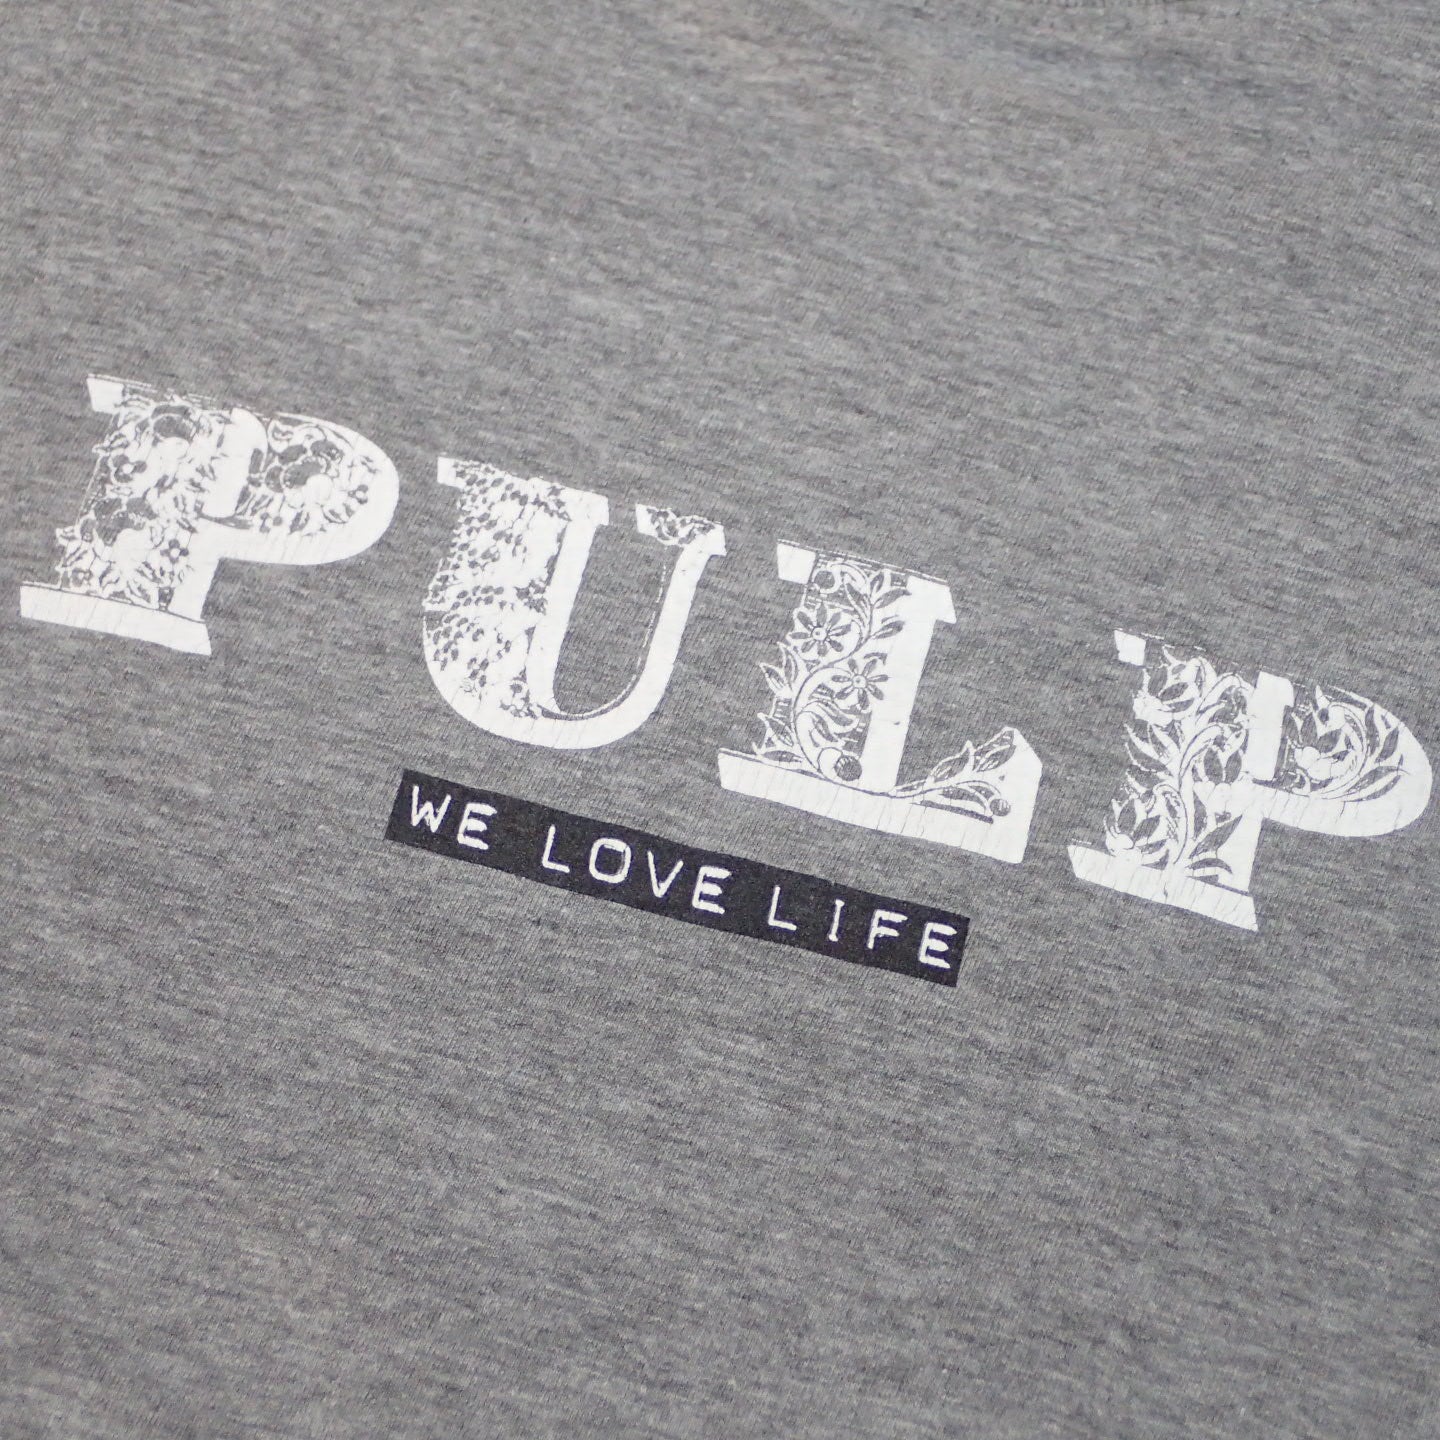 00s Pulp " We Love Life Tee"